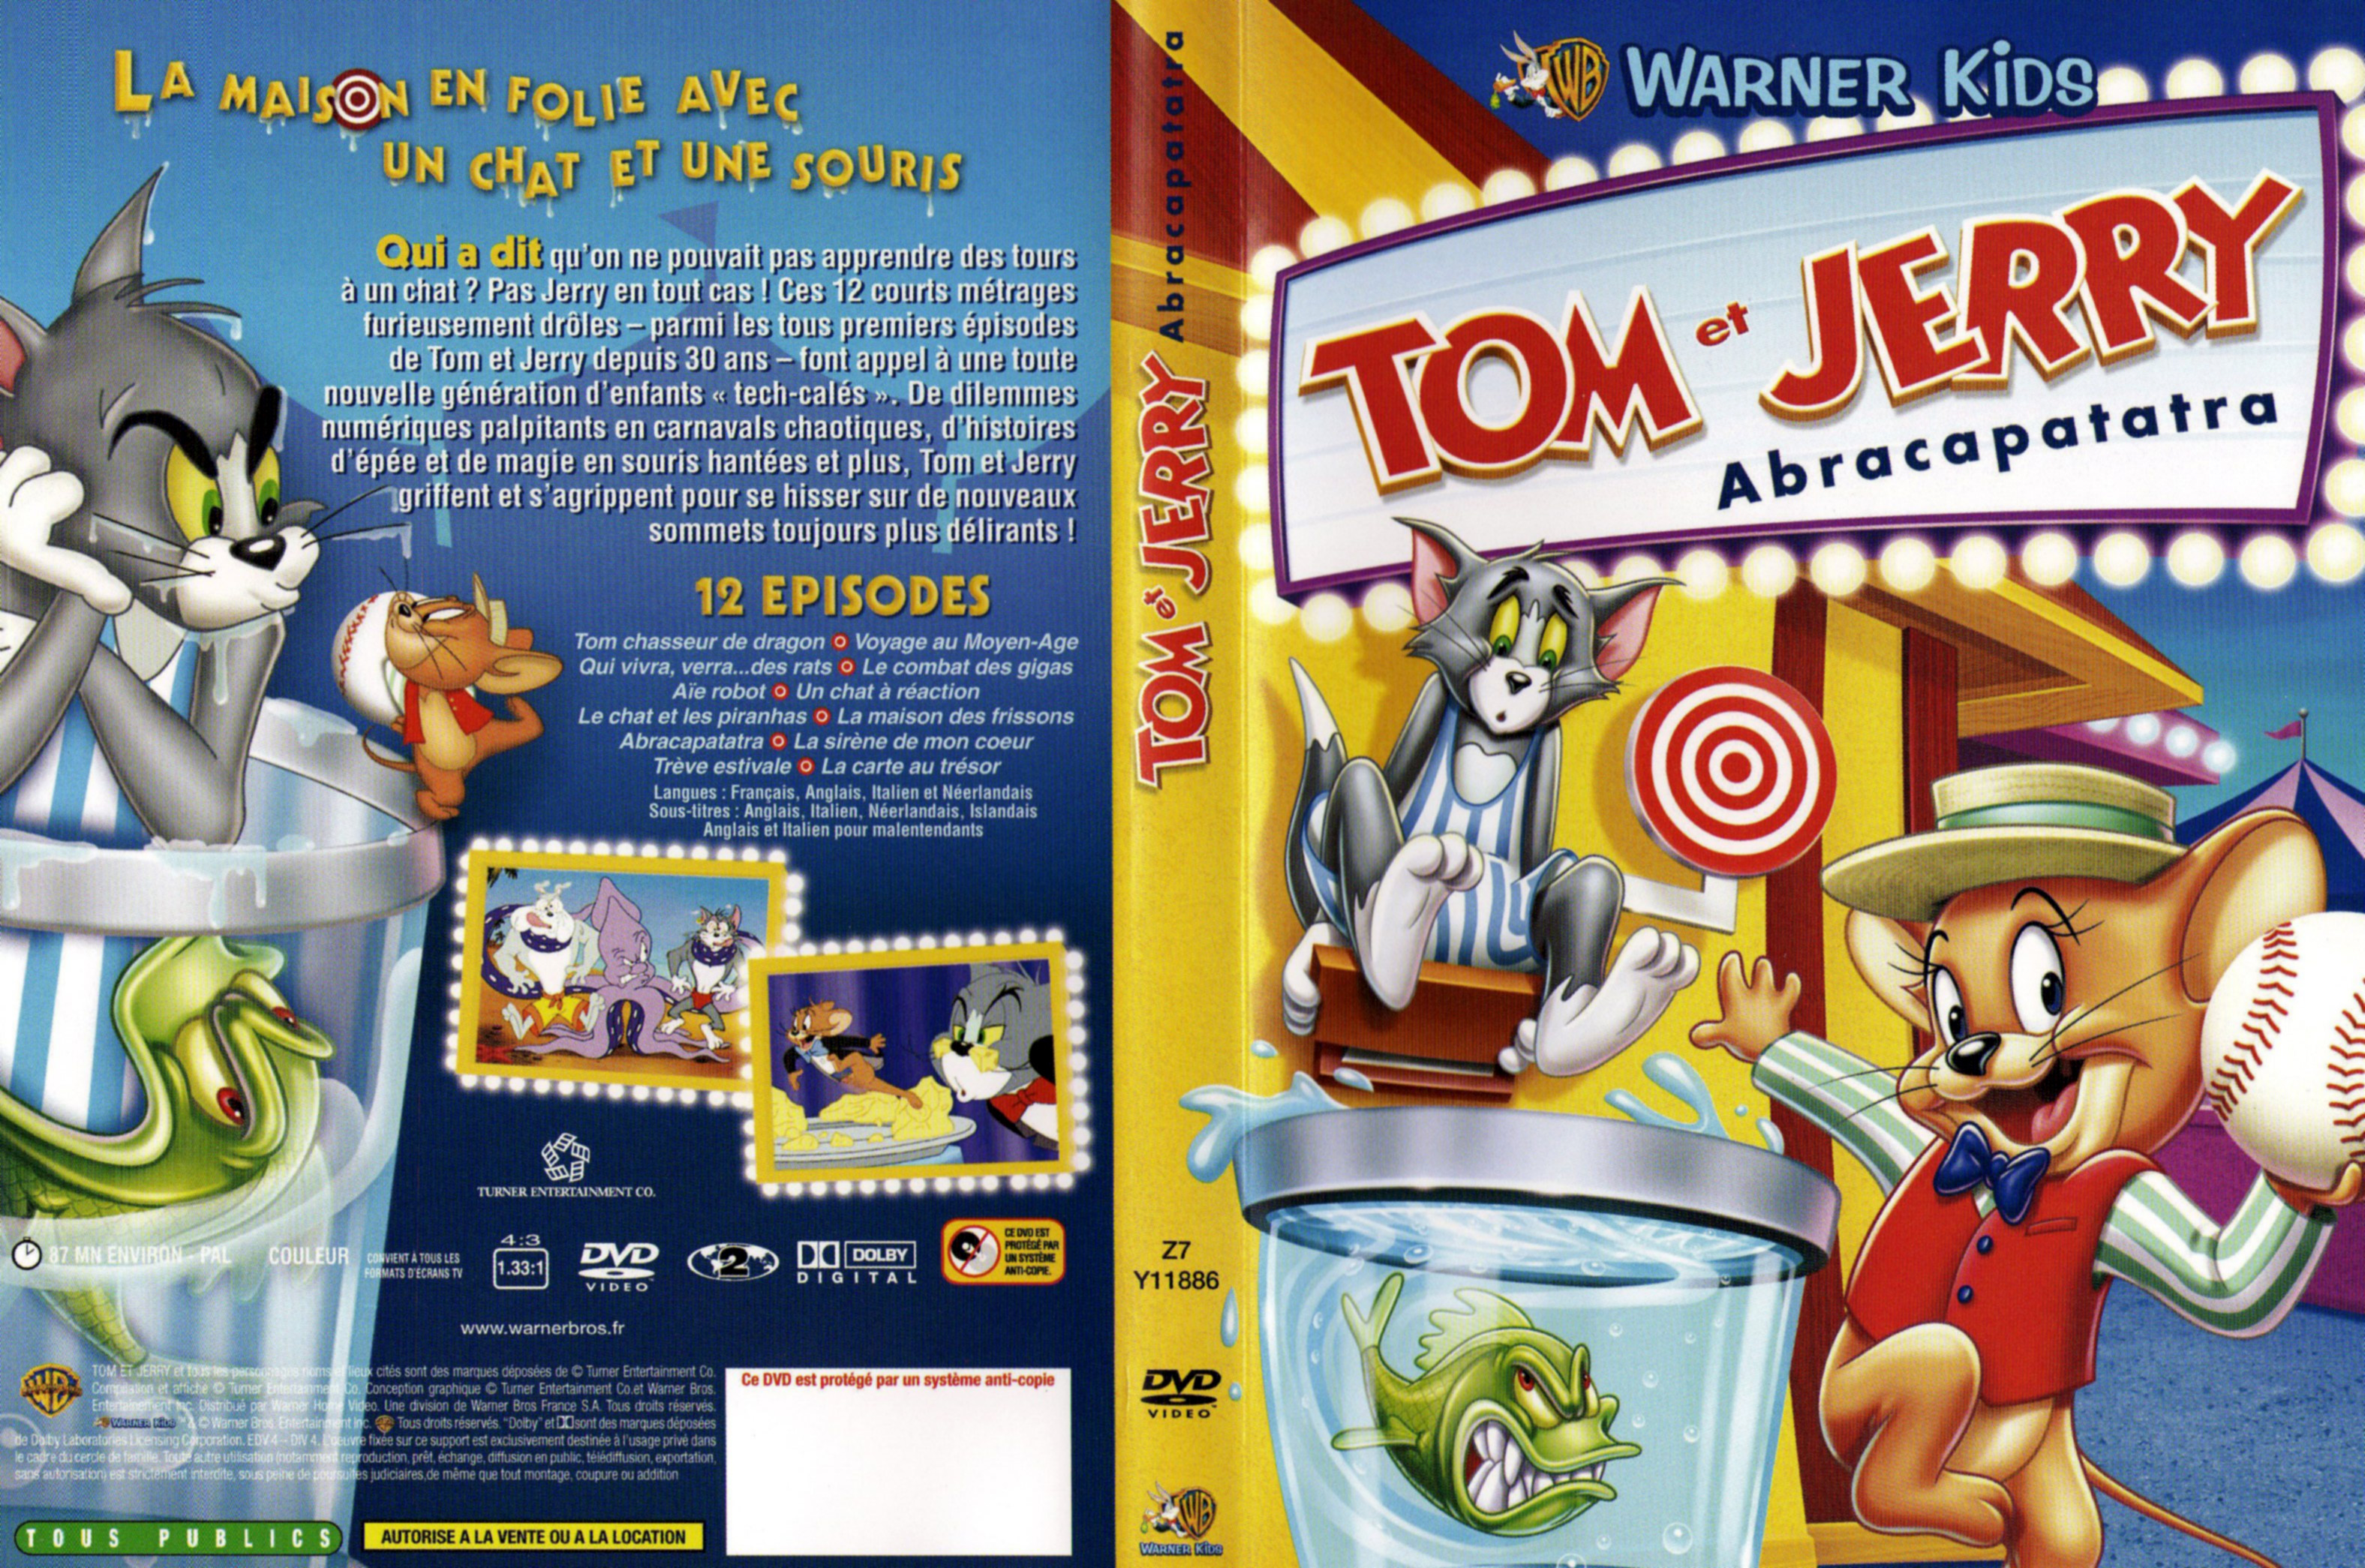 Jaquette DVD Tom et Jerry - Abracapatatra